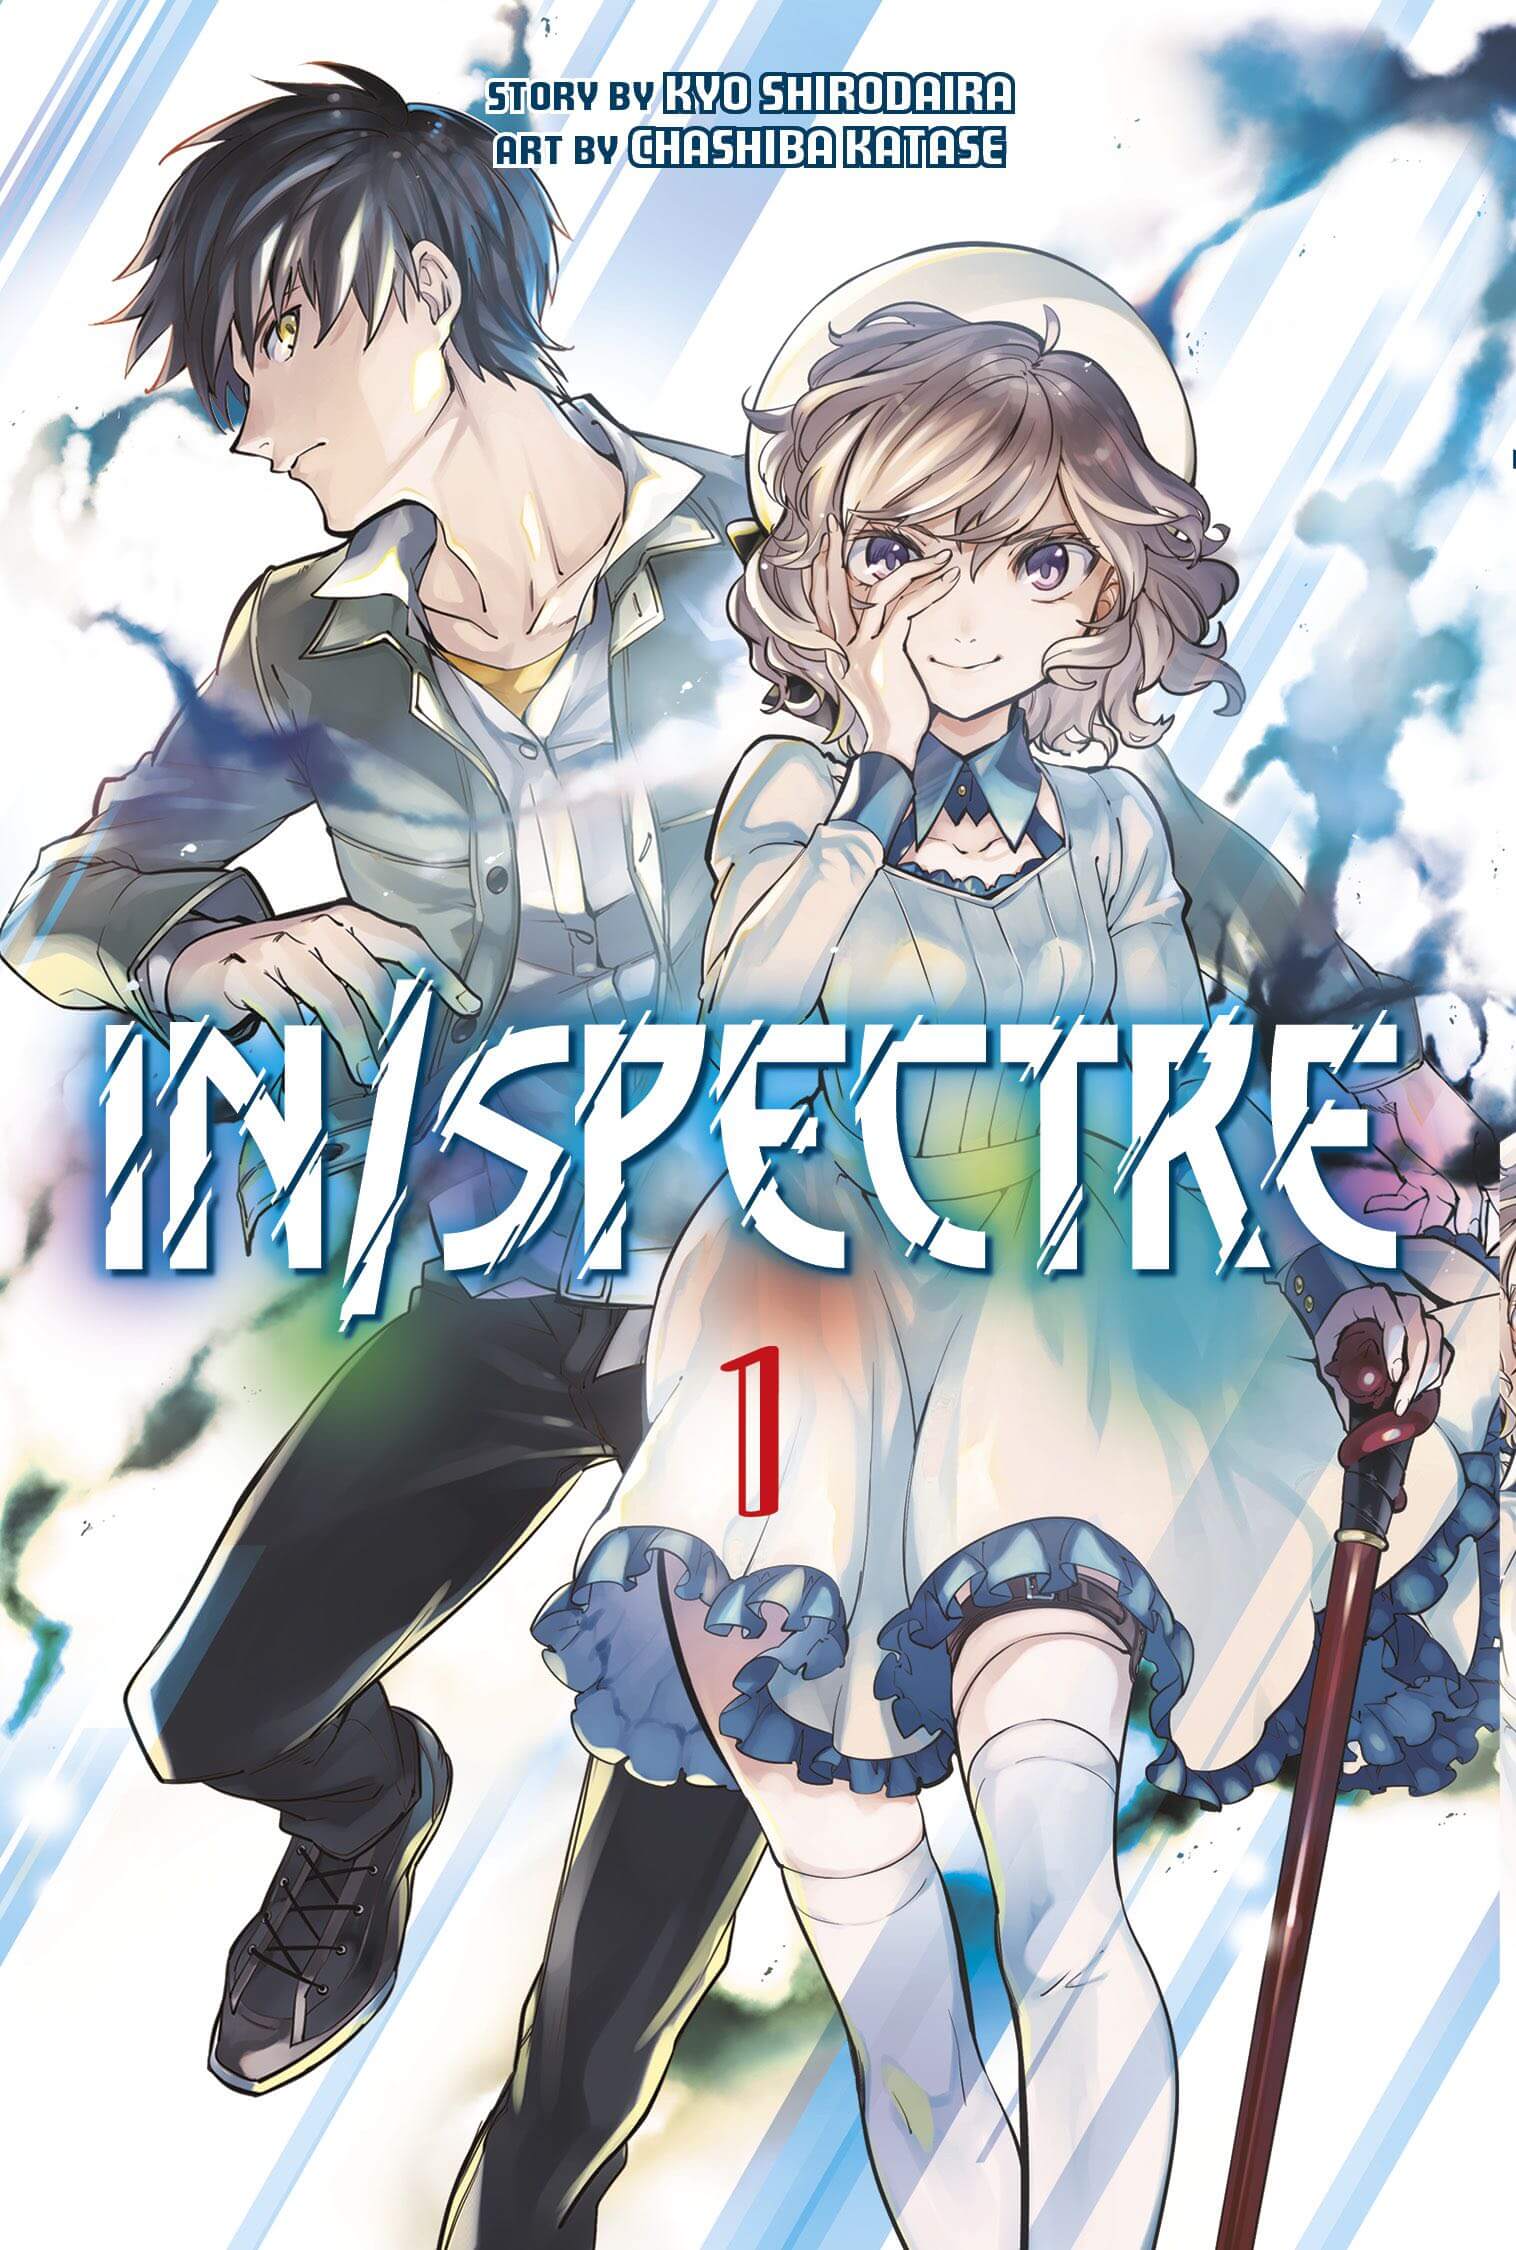 inspectre manga ending